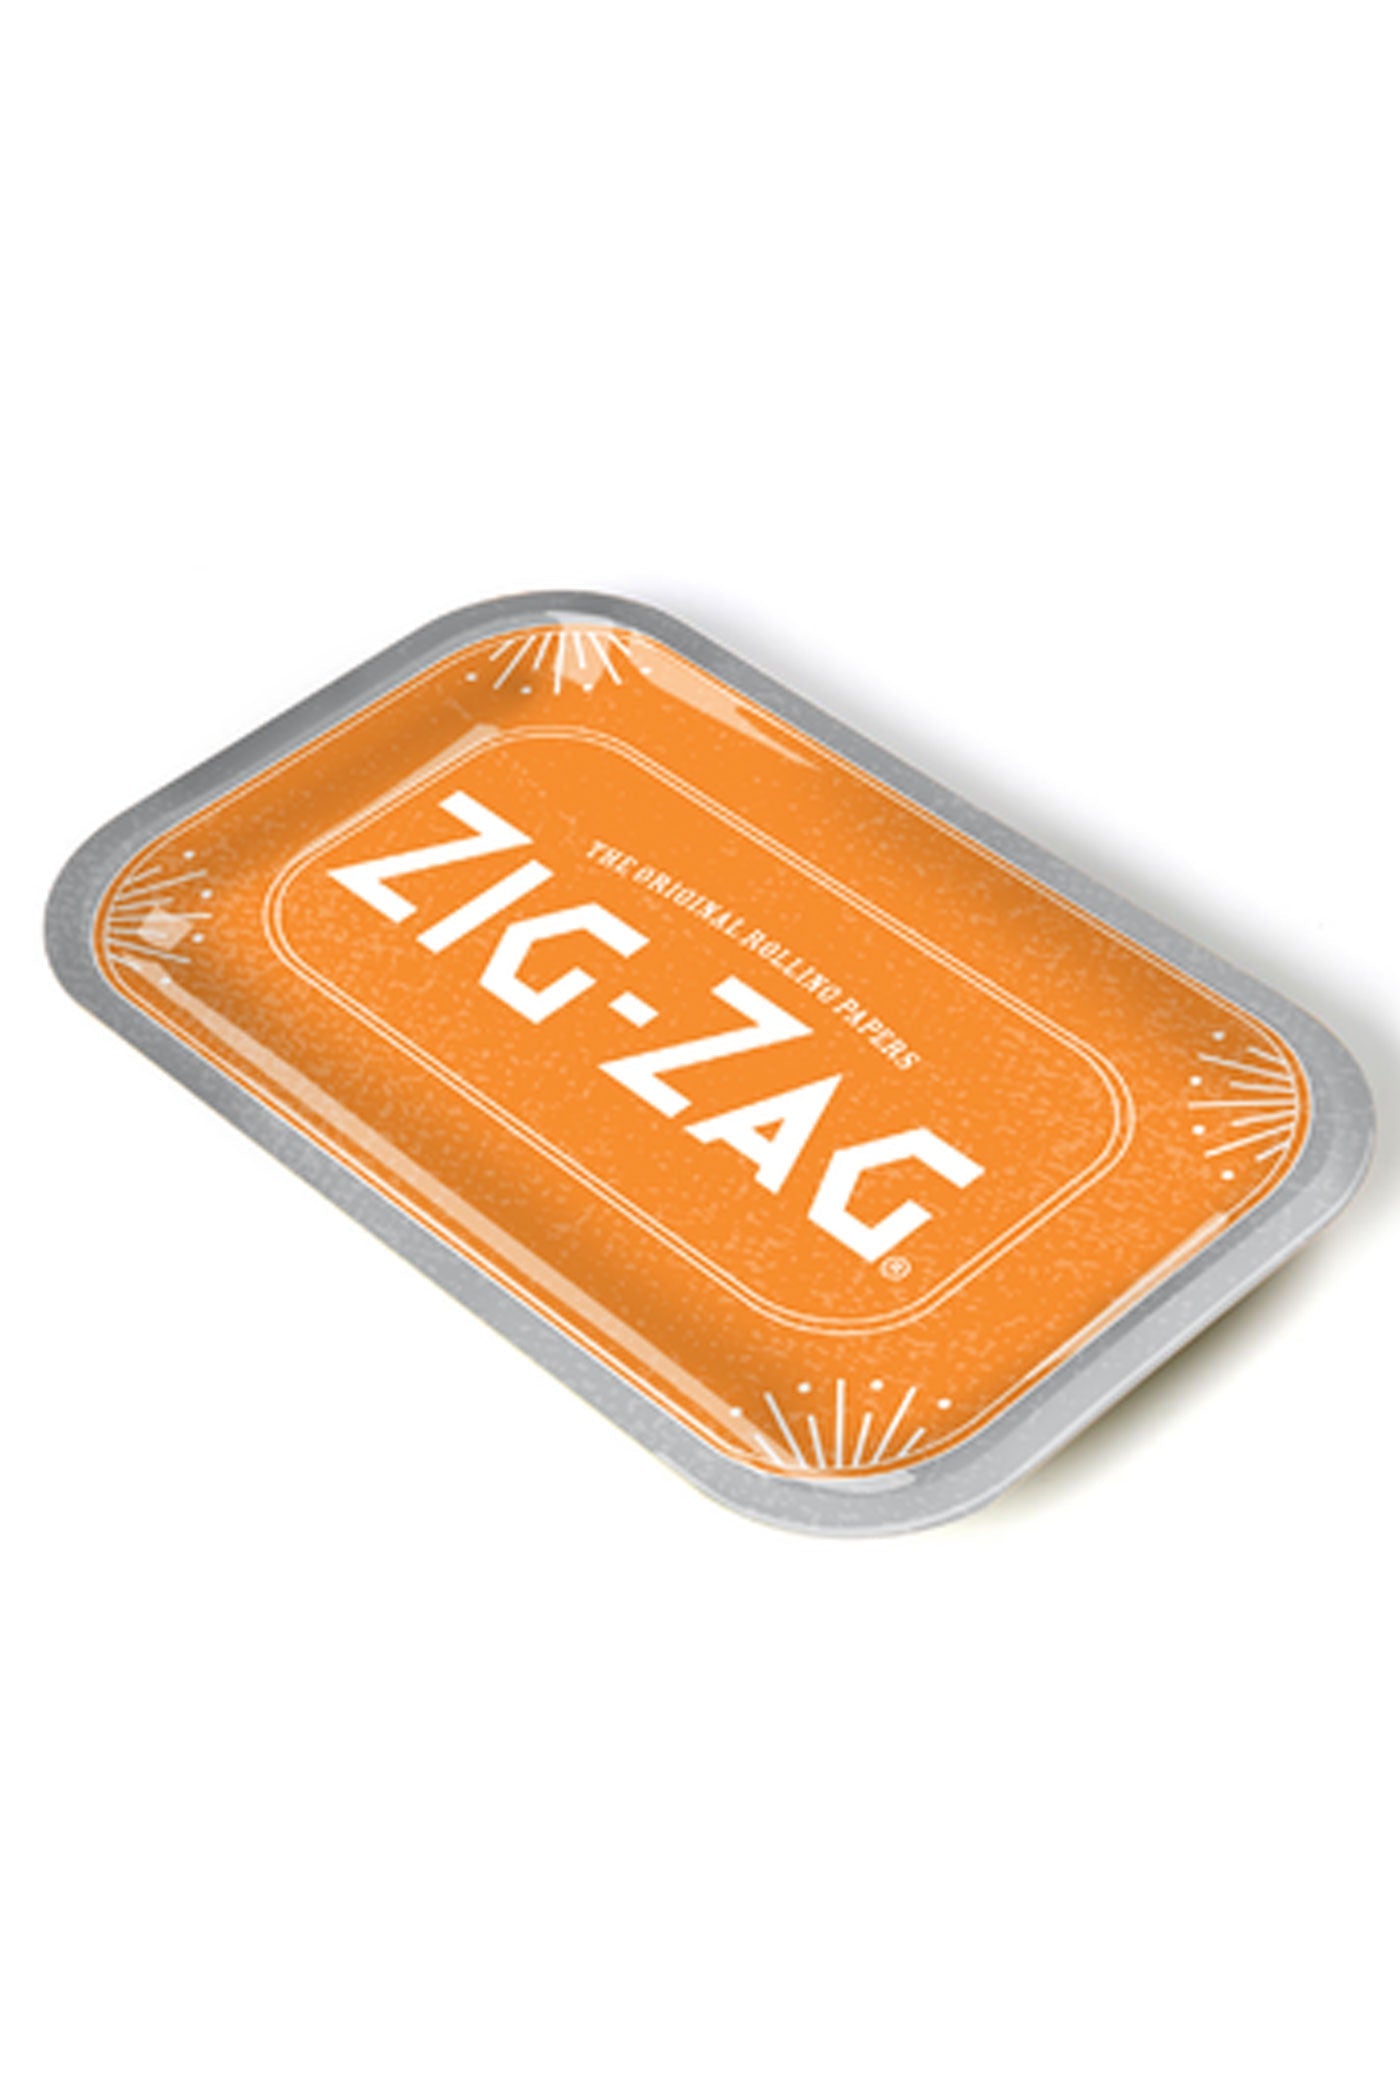 Zig-Zag Metal Rolling Tray - Medium - Since 1879_1